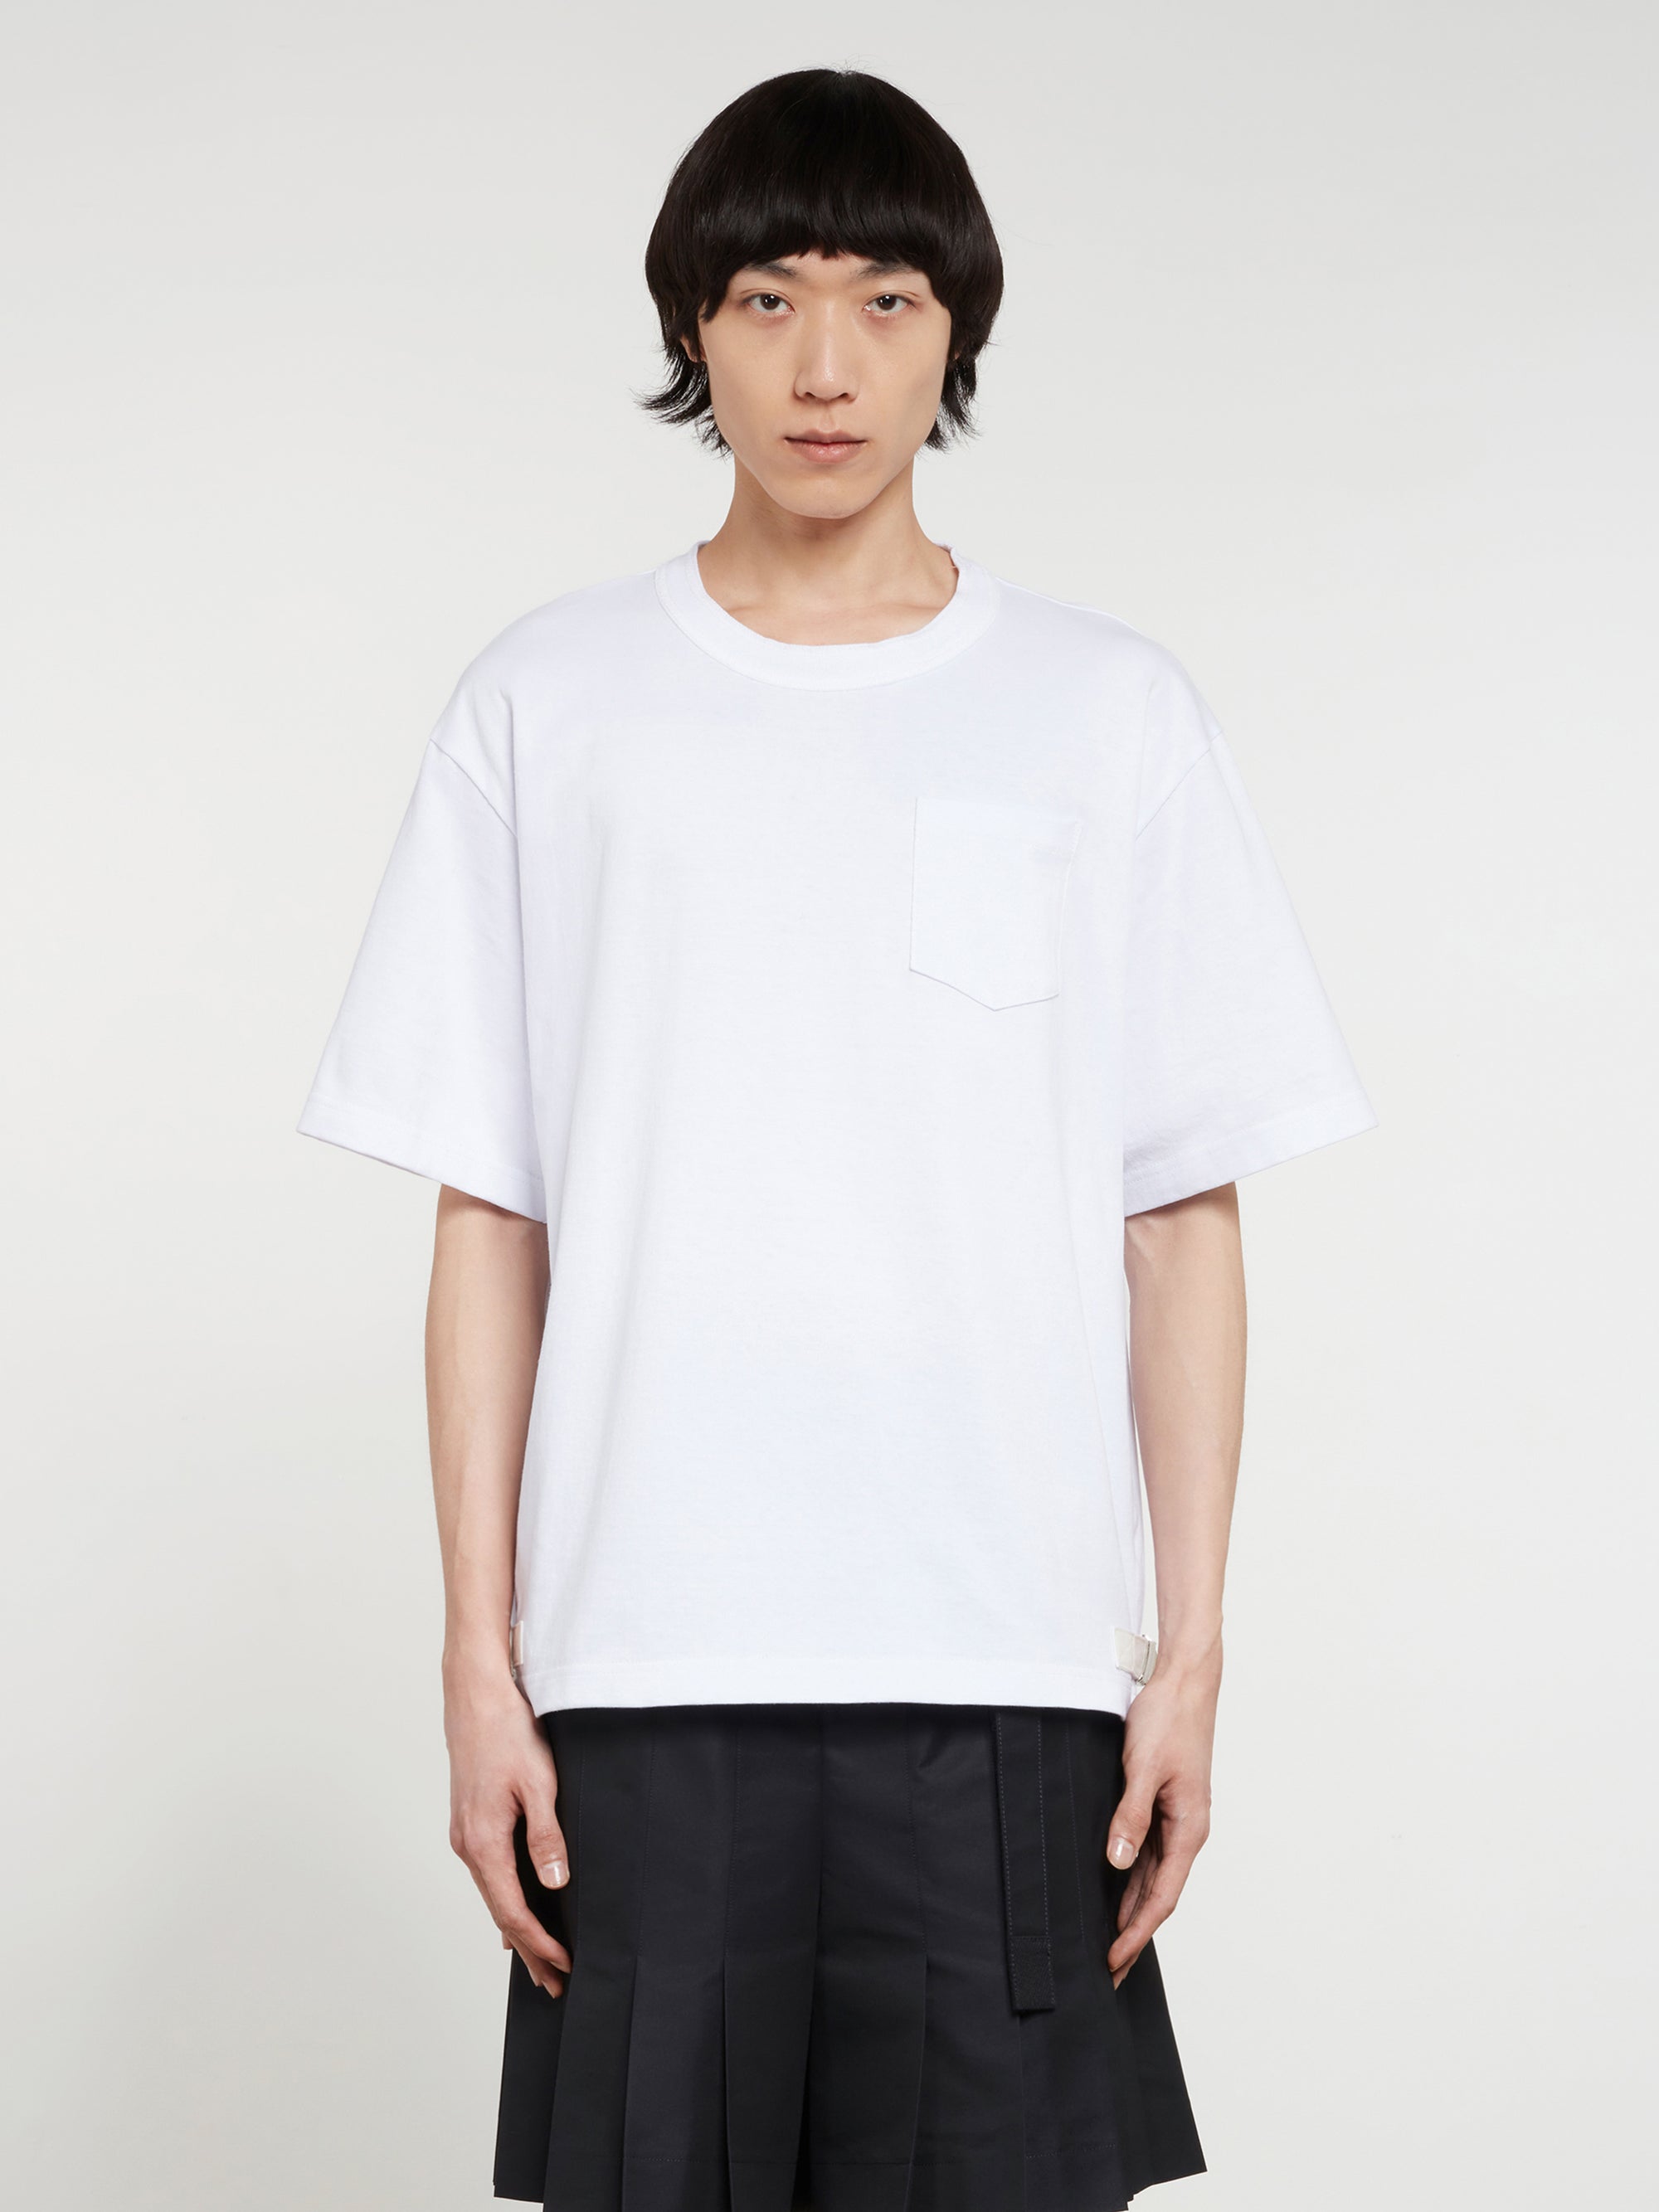 Sacai - Men’s Nylon Twill Cotton Jersey T-shirt - (Off White) view 1